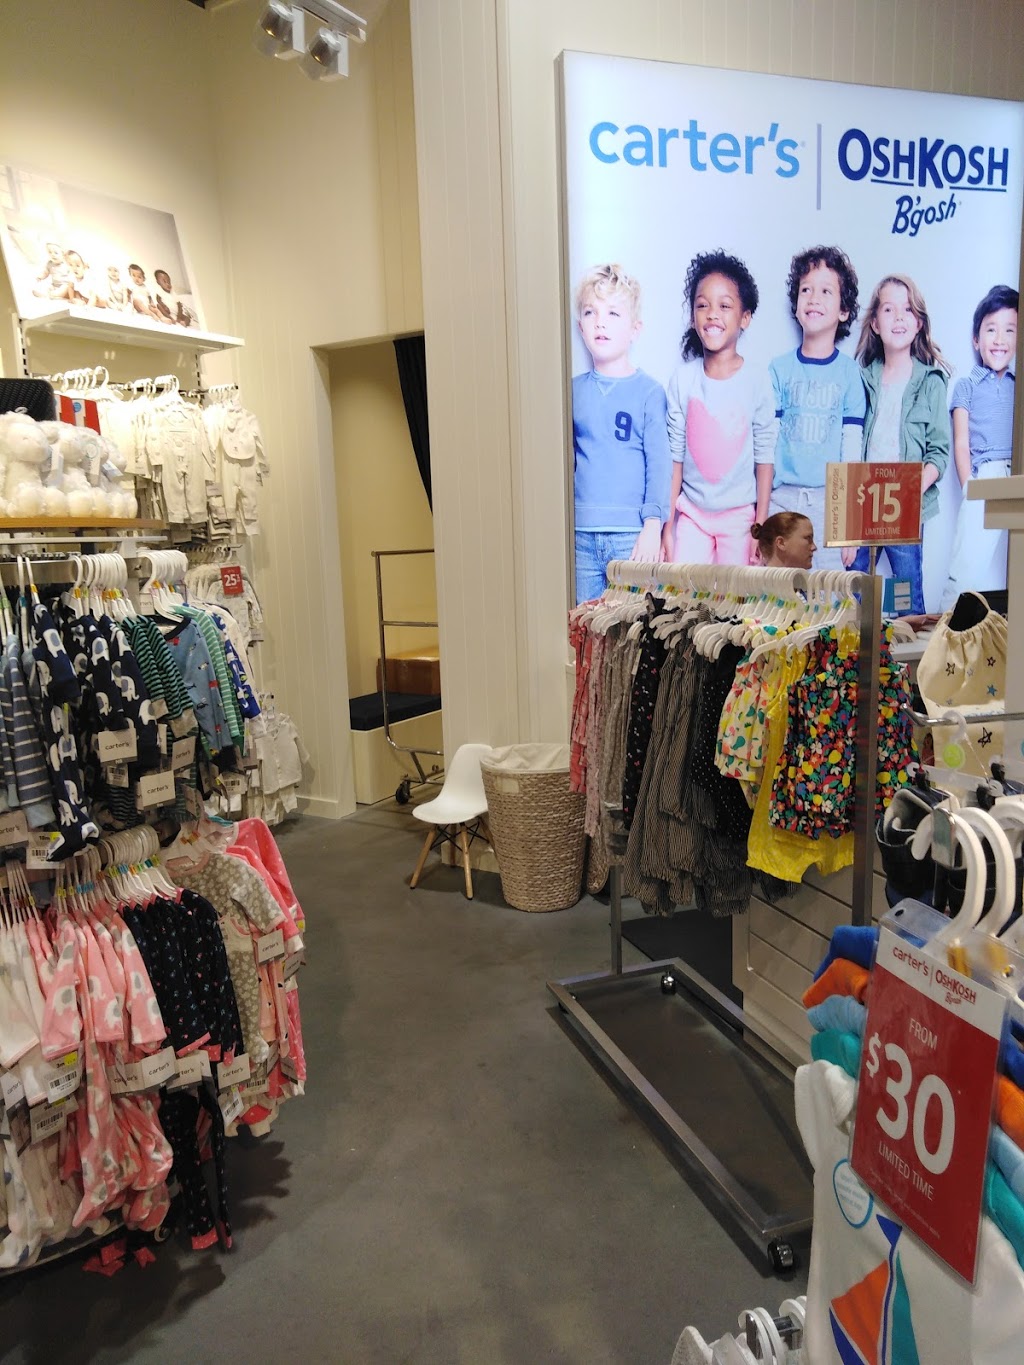 Carters - OshKosh BGosh Perth | clothing store | 11 High St, Perth Airport WA 6105, Australia | 0295026379 OR +61 2 9502 6379